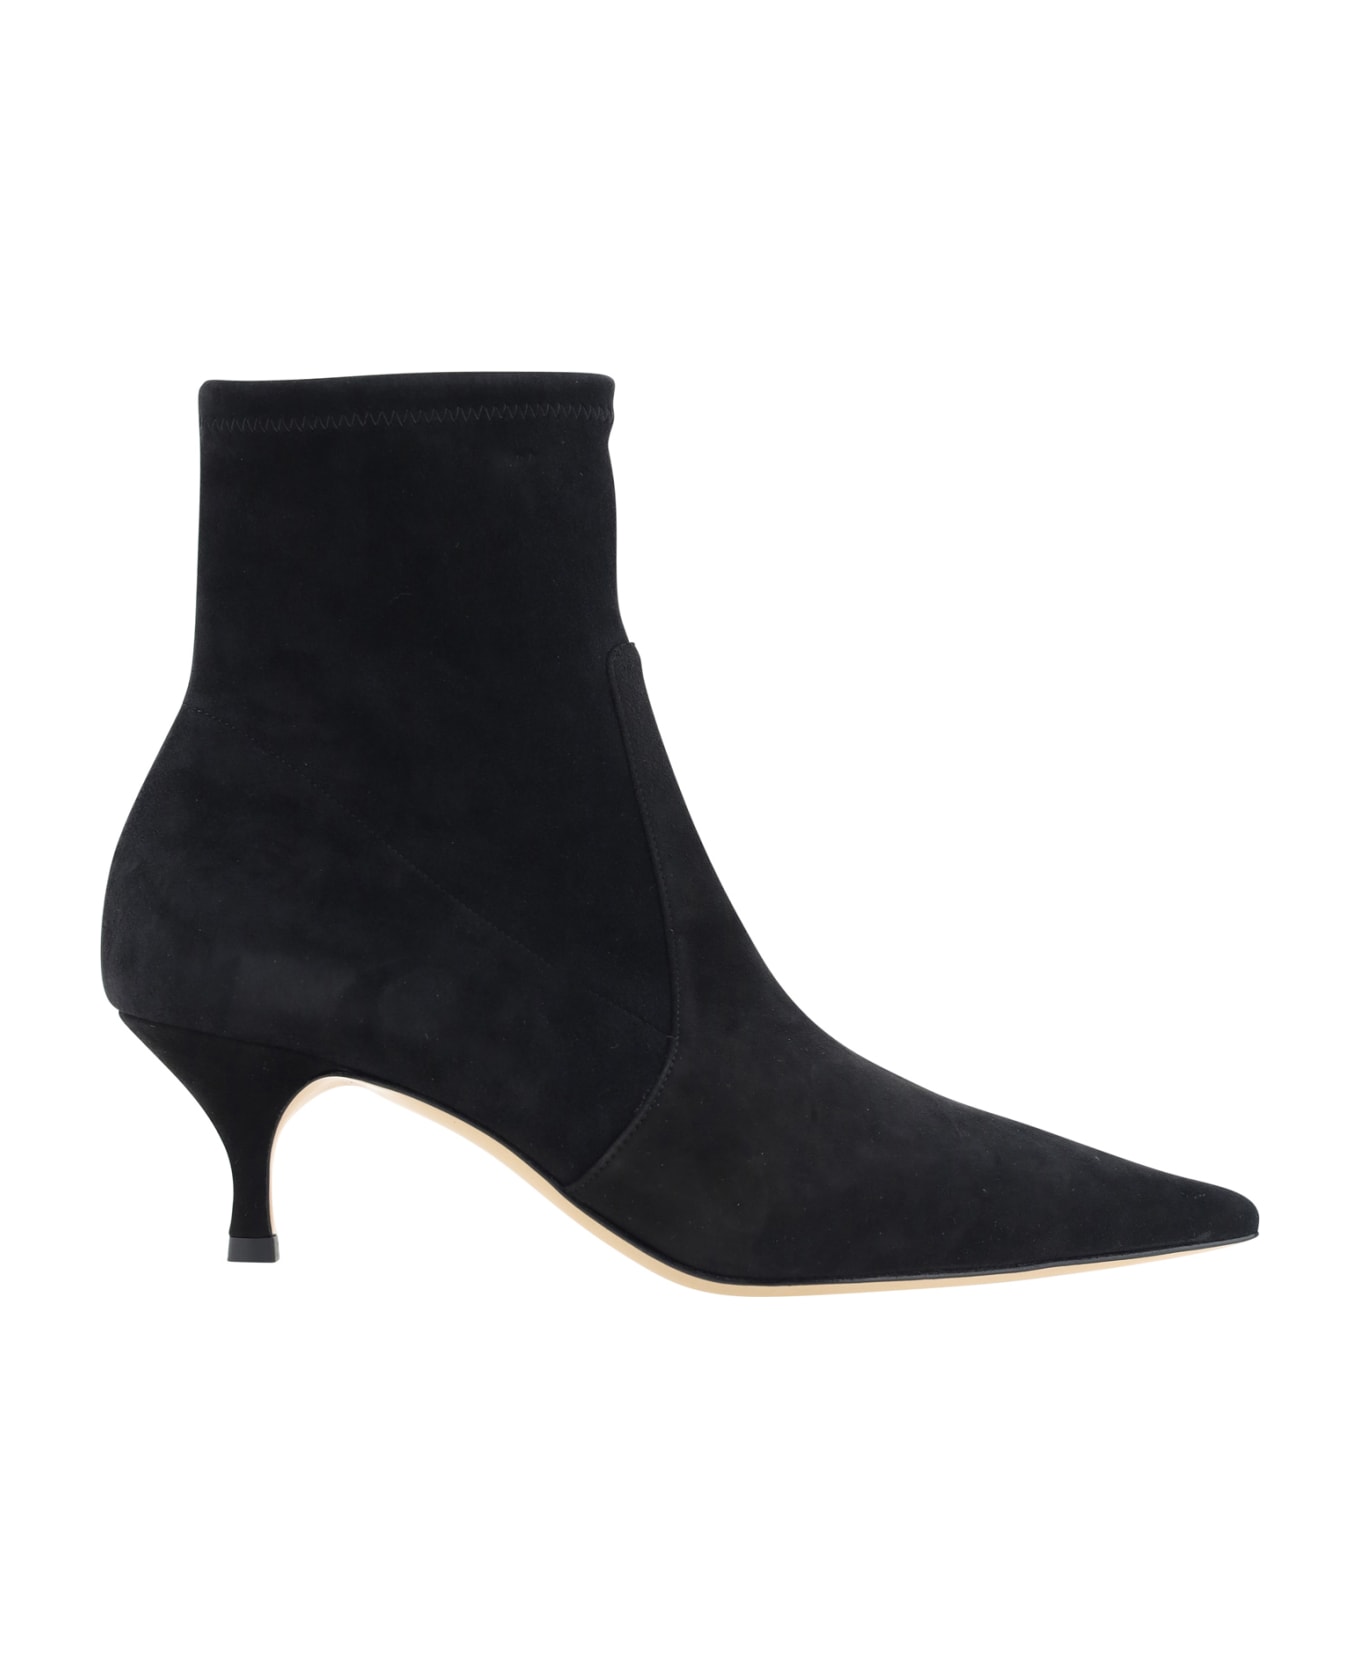 Casadei Heeled Boots - Black ブーツ